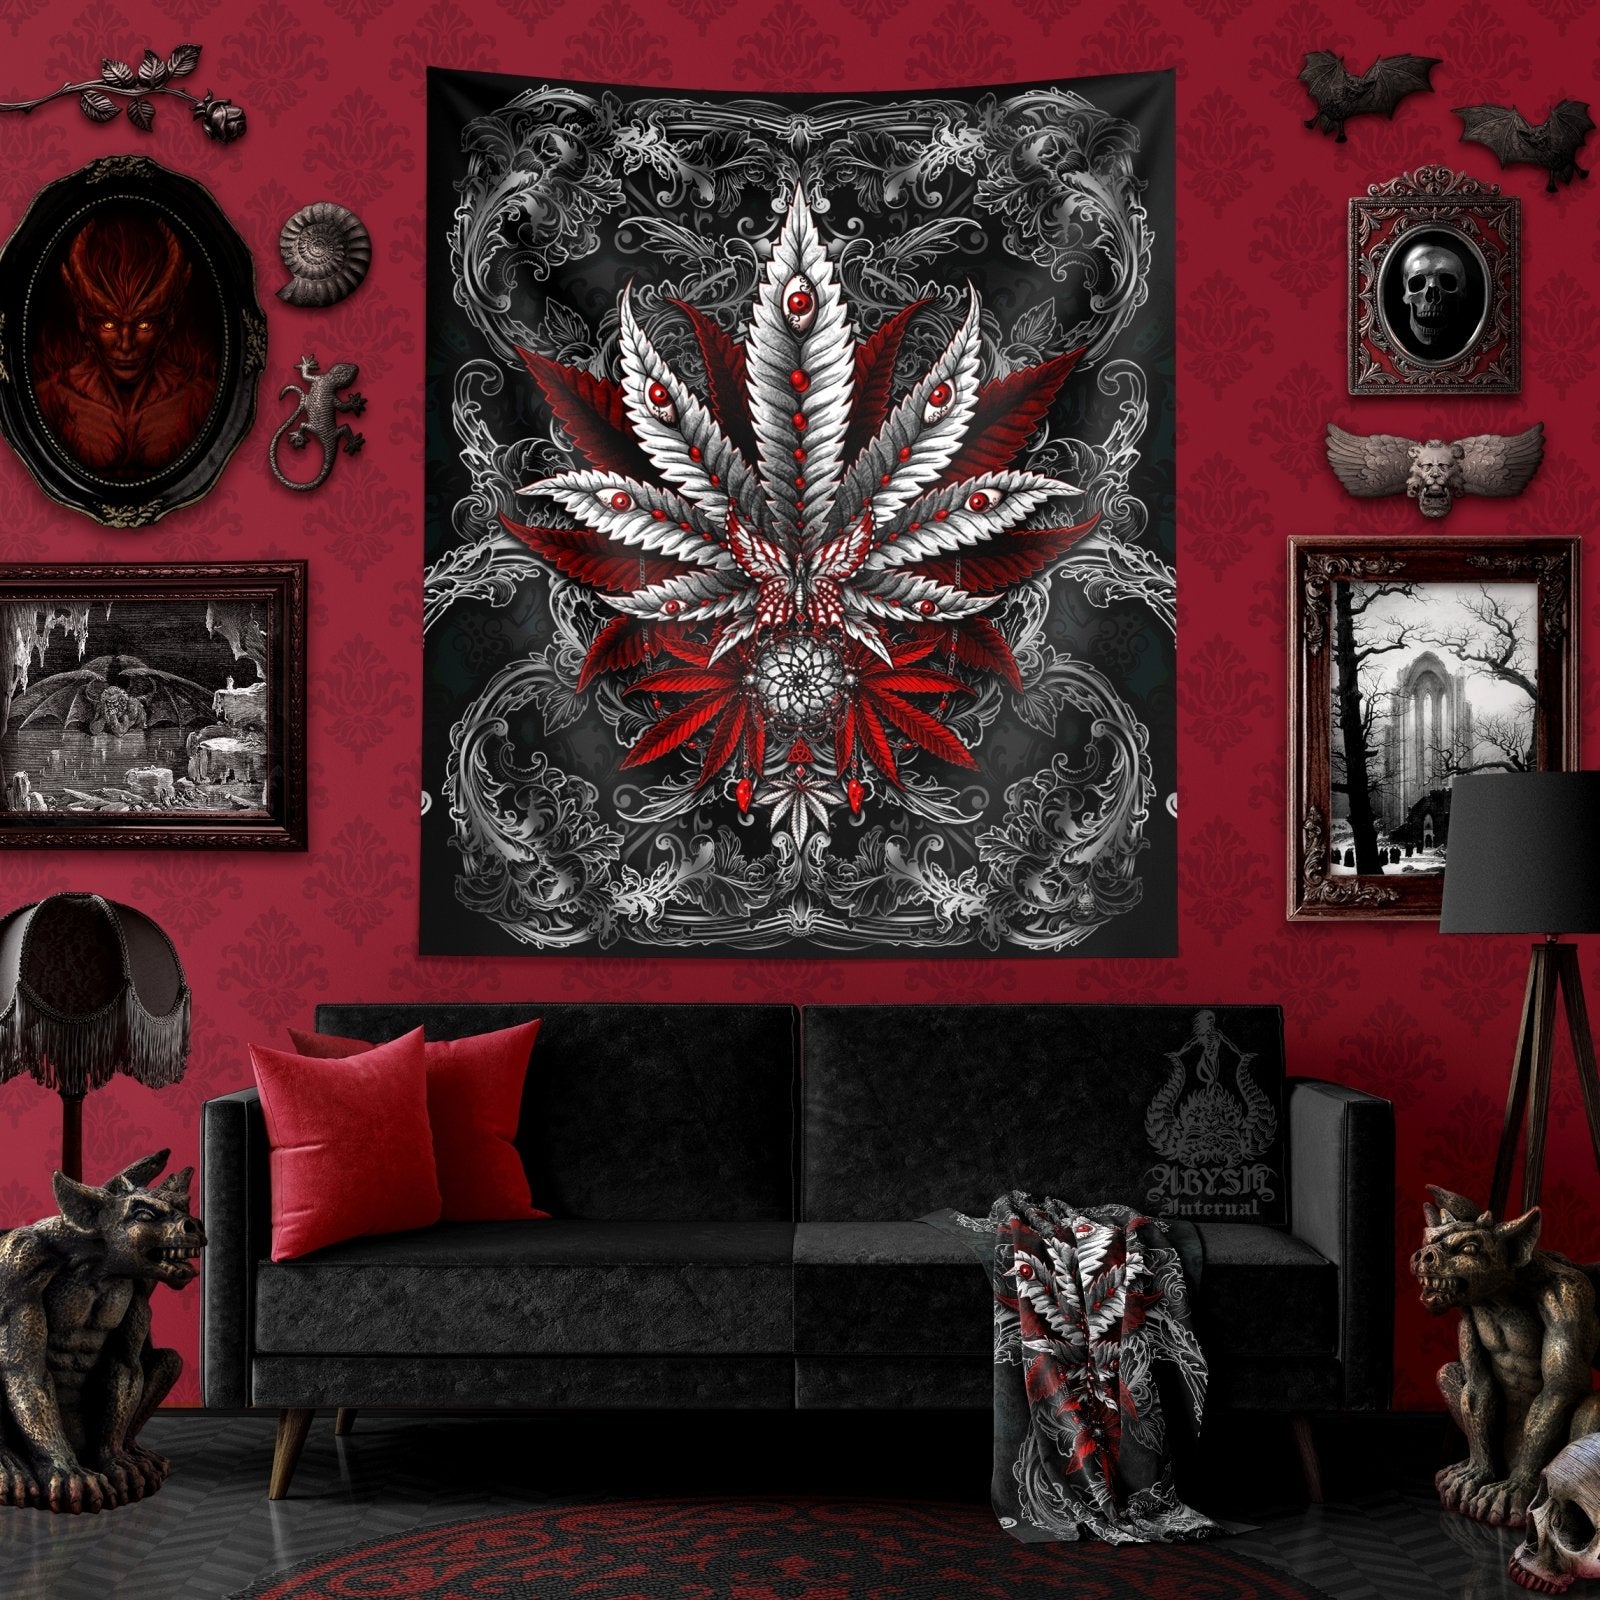 Gothic Weed Tapestry, Cannabis Shop Decor, Marijuana Wall Hanging, Goth Home Decor, Art Print, 420 Gift, Marijuana - Dark - Abysm Internal